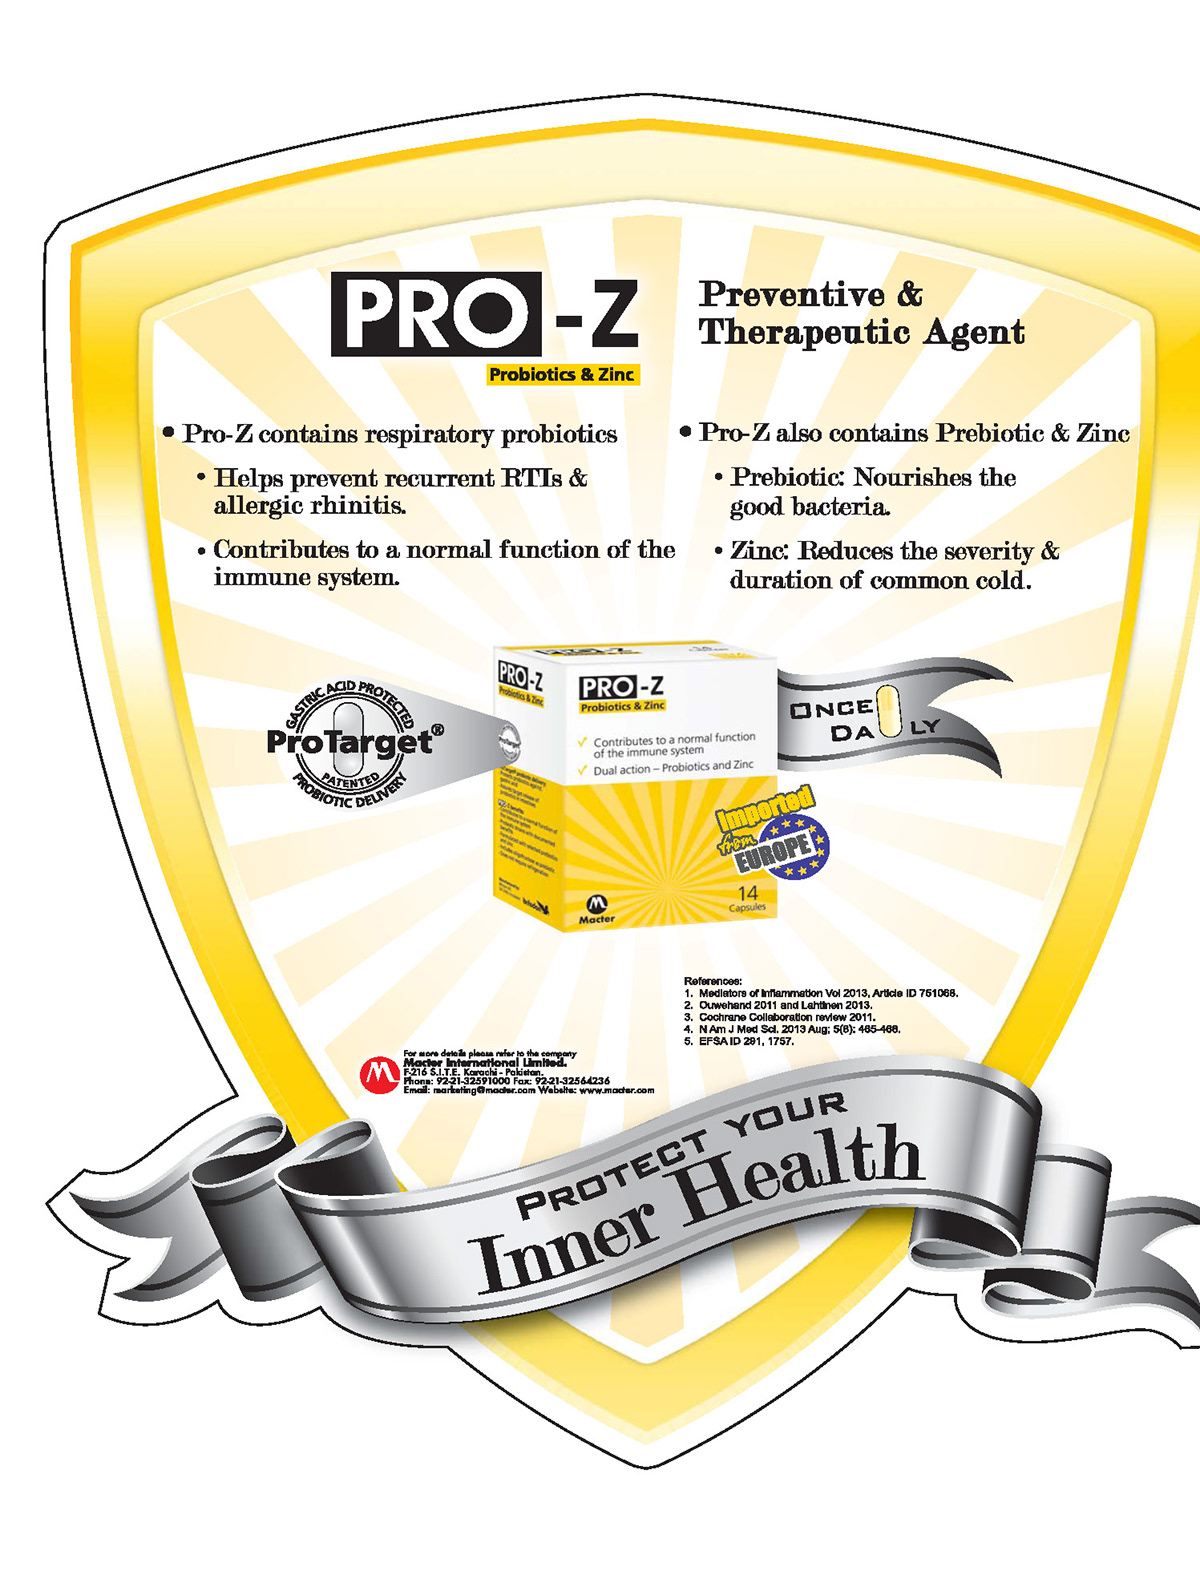 URTI Chest Infection  Immune Response Pro-Z Probiotics & Zinc common cold Health respiratory protarget Prevetive therapeutic agent allergic rti Rhinitis